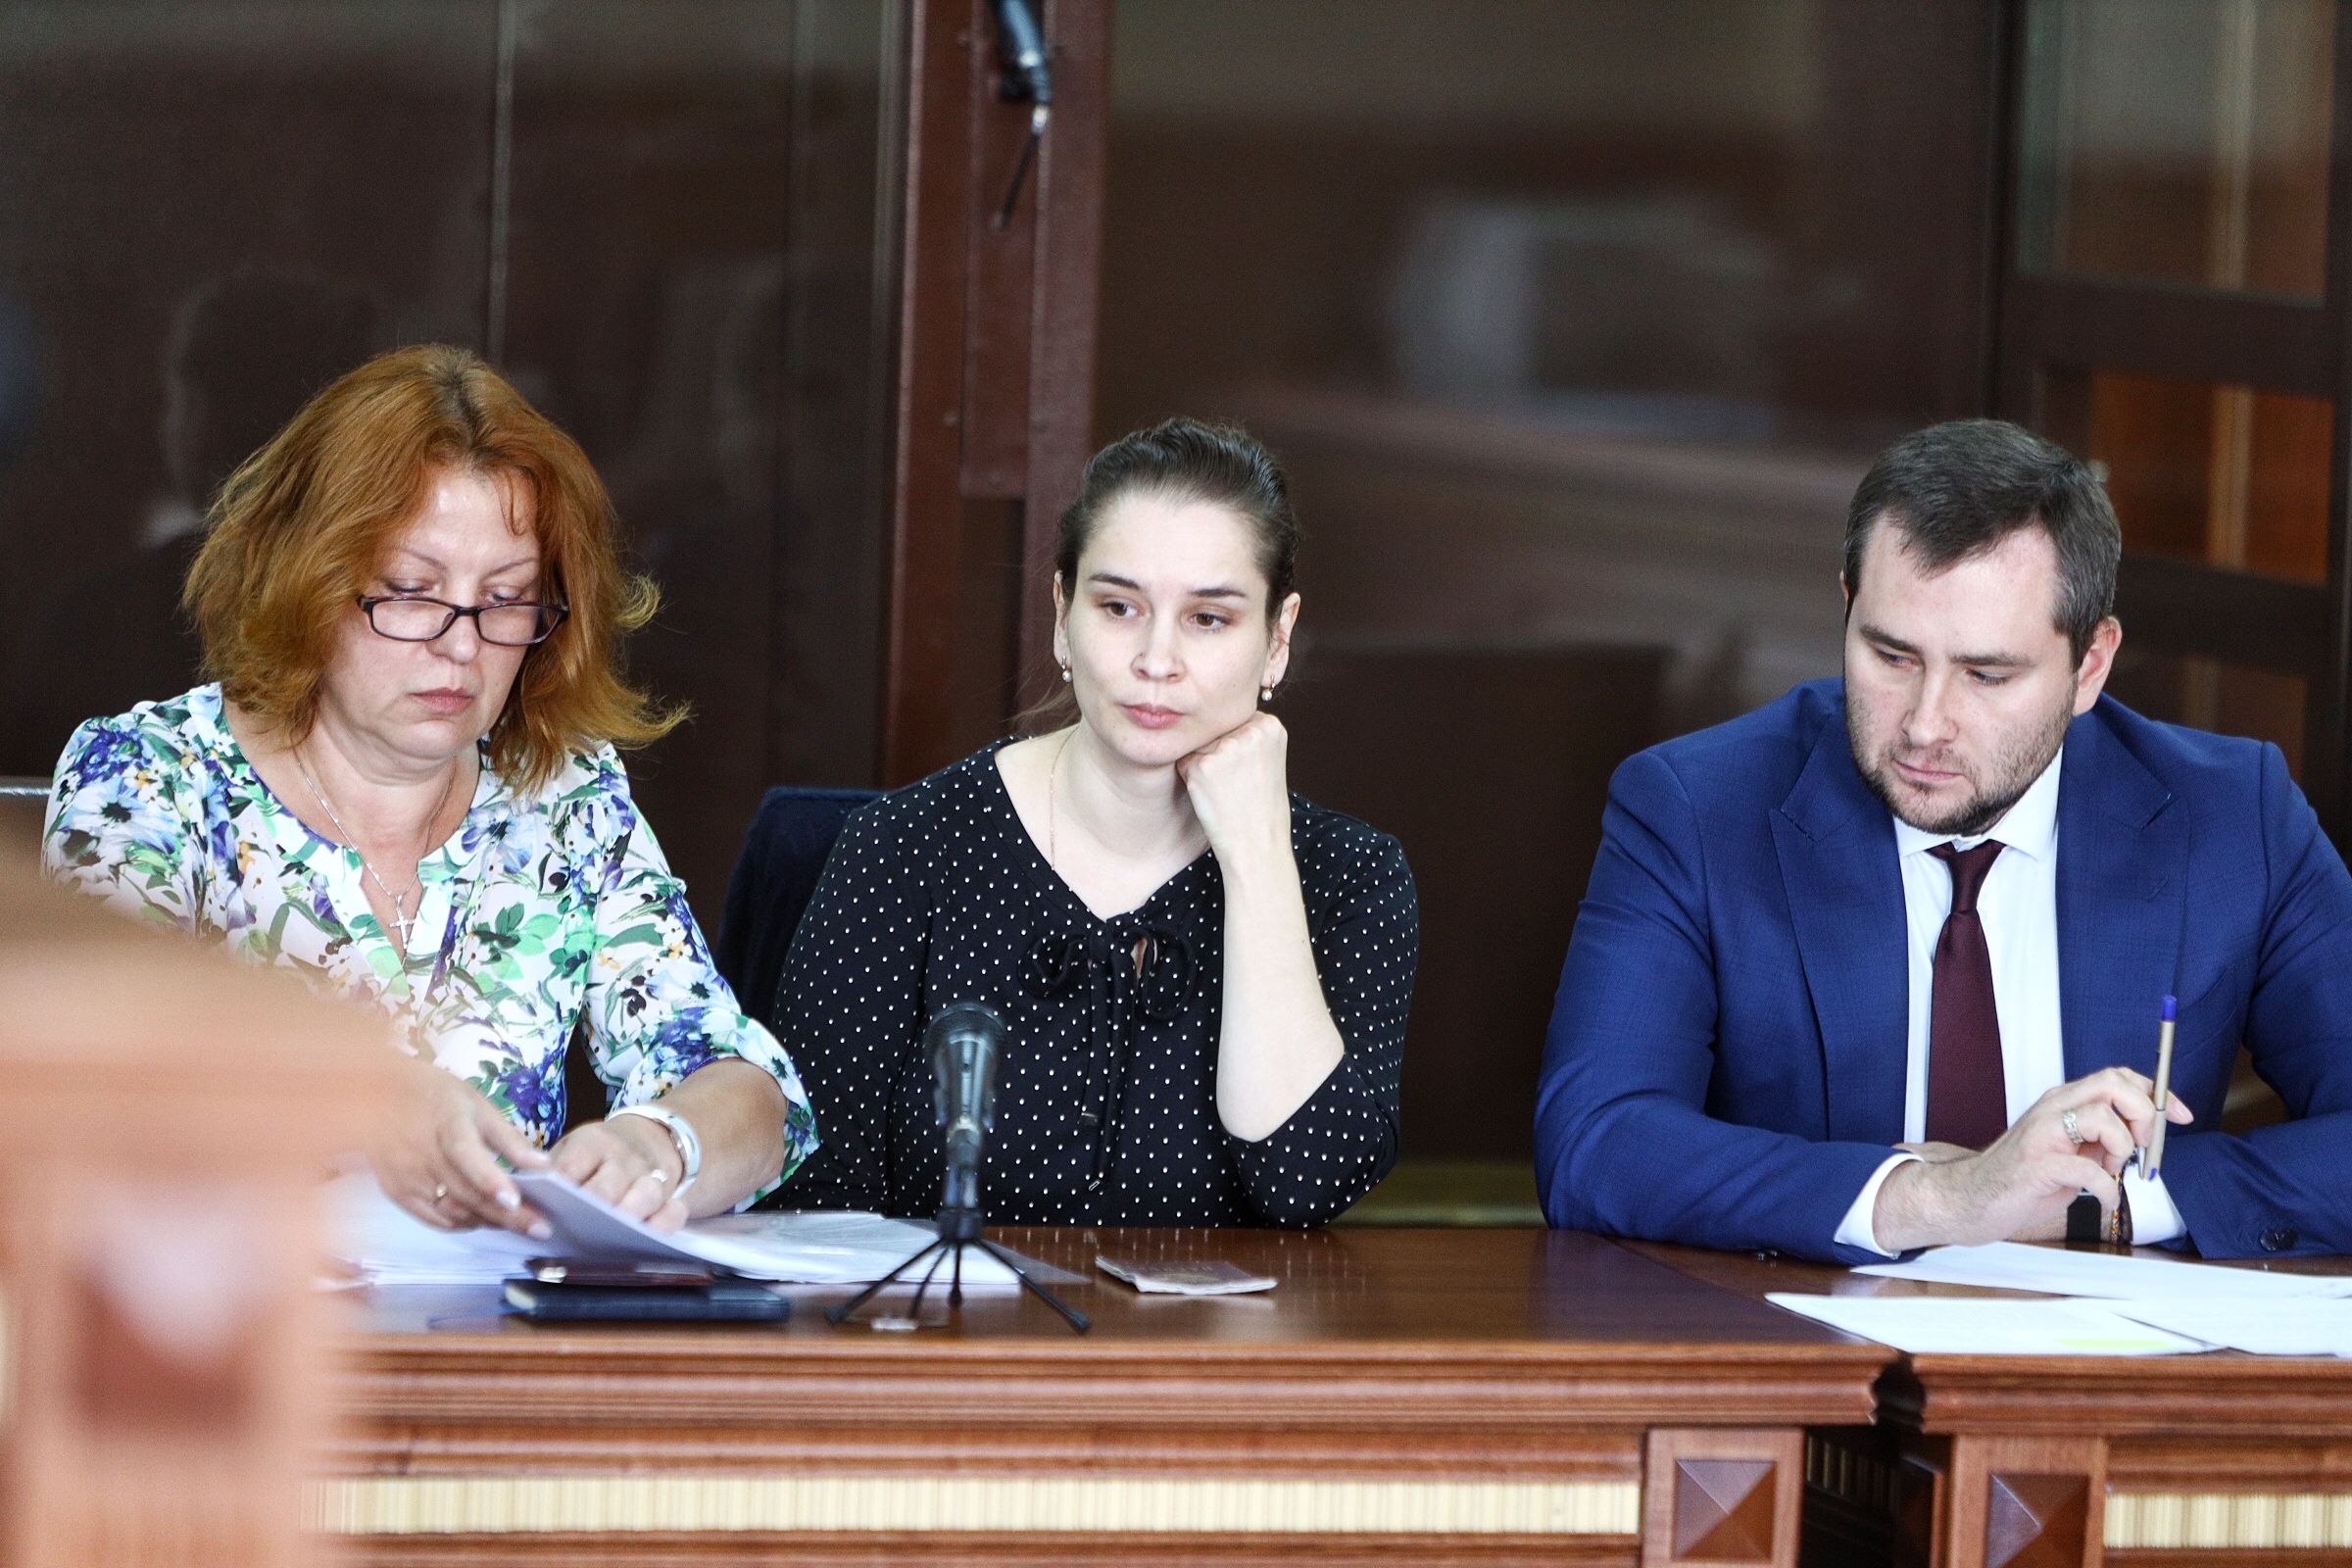 В центре &mdash; Элина Сушкевич, справа &mdash; Андрей Золотухин